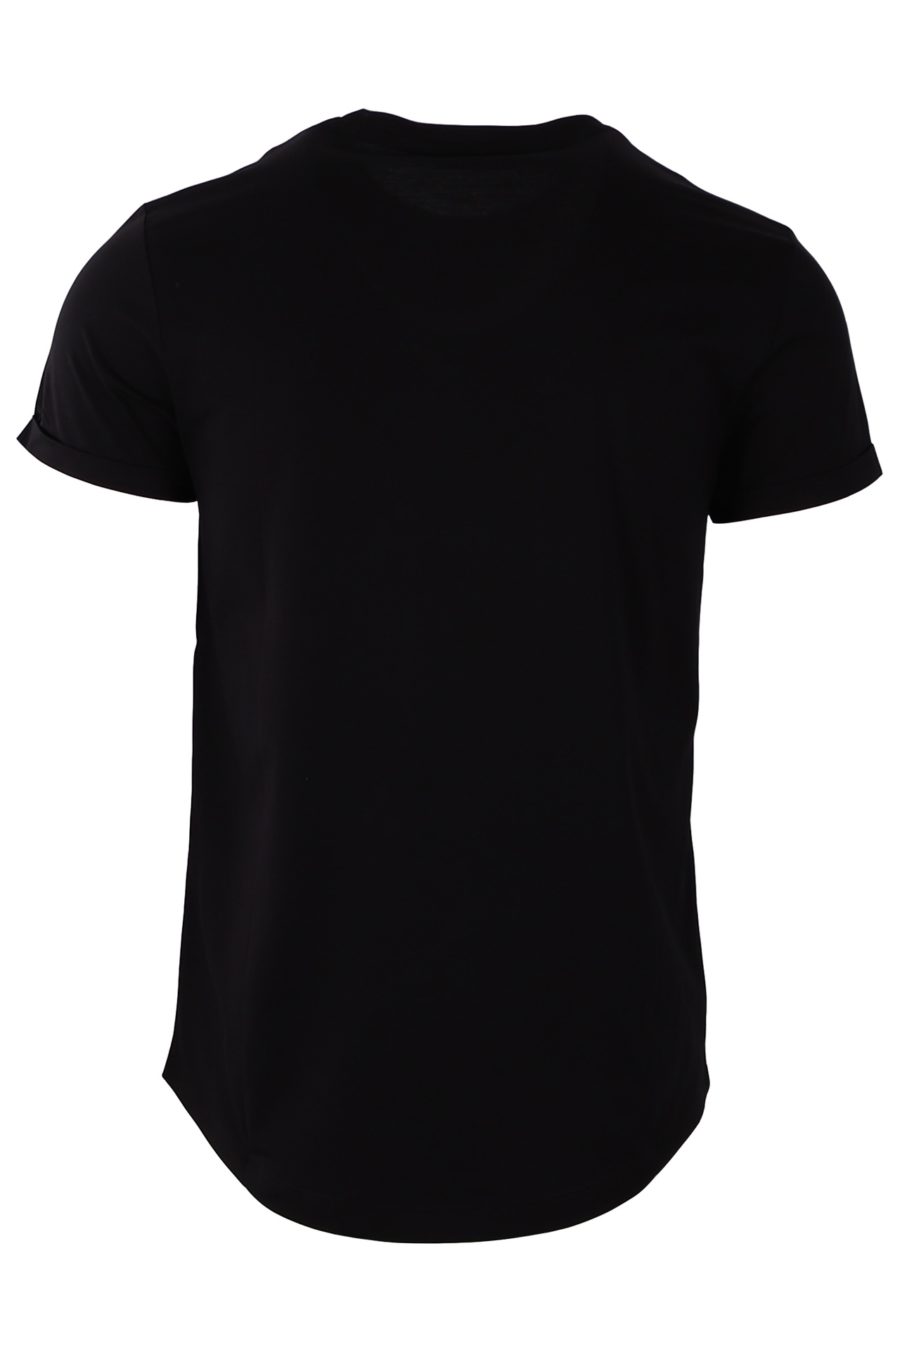 T-shirt Balmain black velvet round logo - 6ece680c74232d5e88ea3dd02607499af81dfe2e